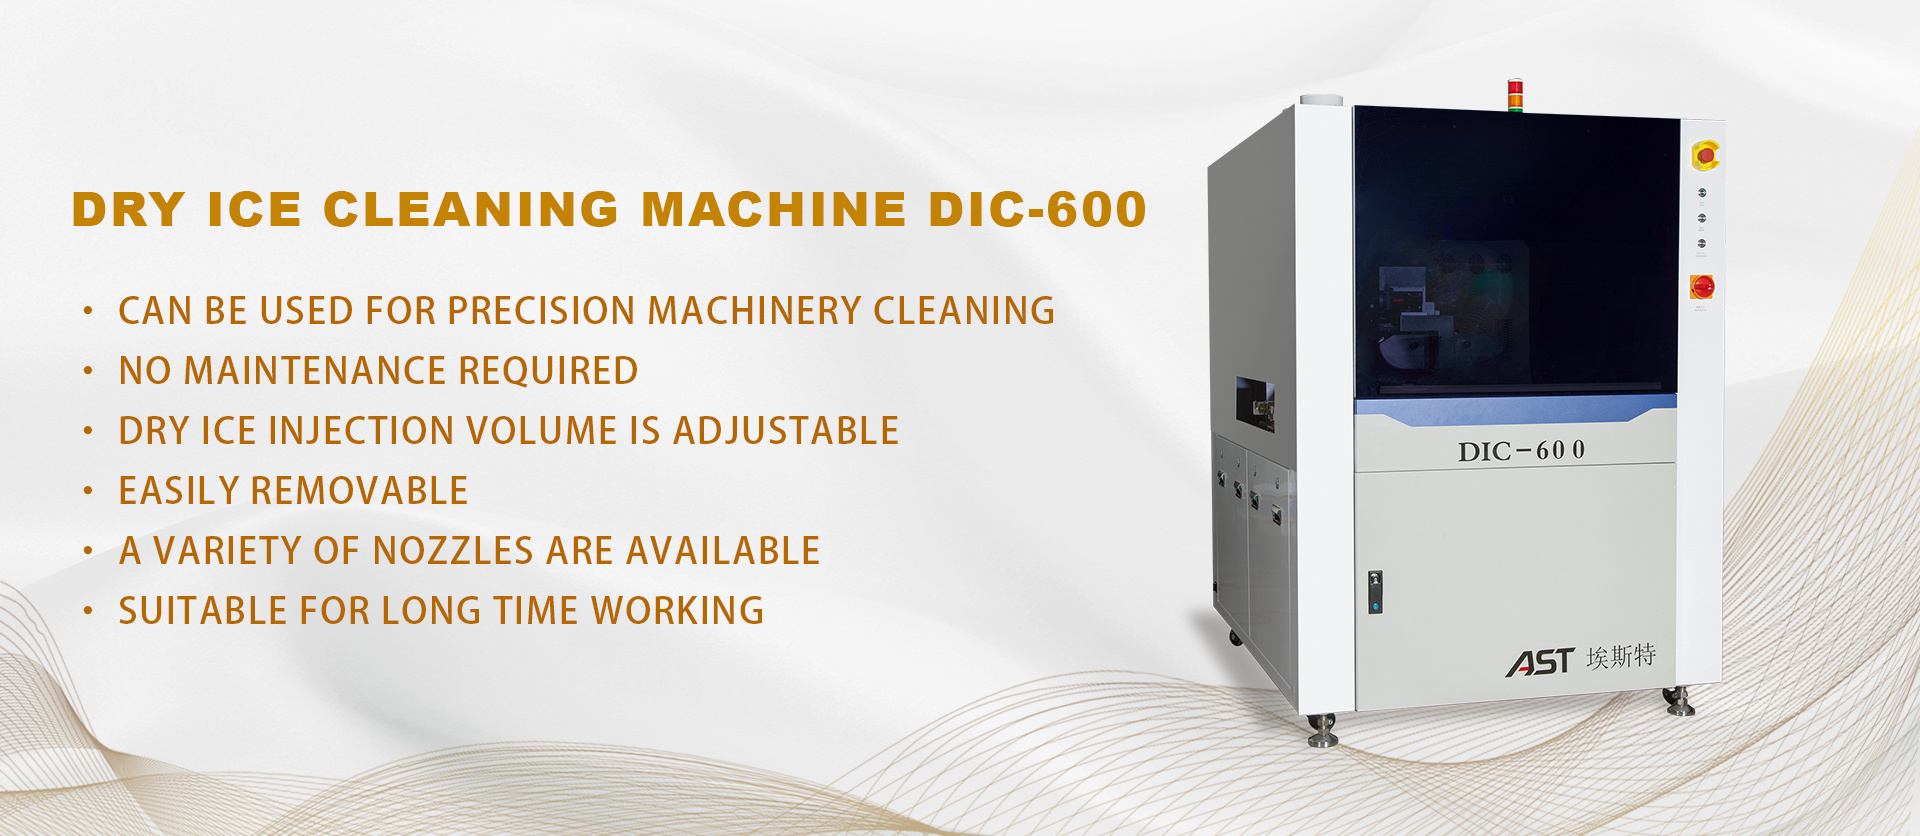 PCBA dry ice cleaning machine